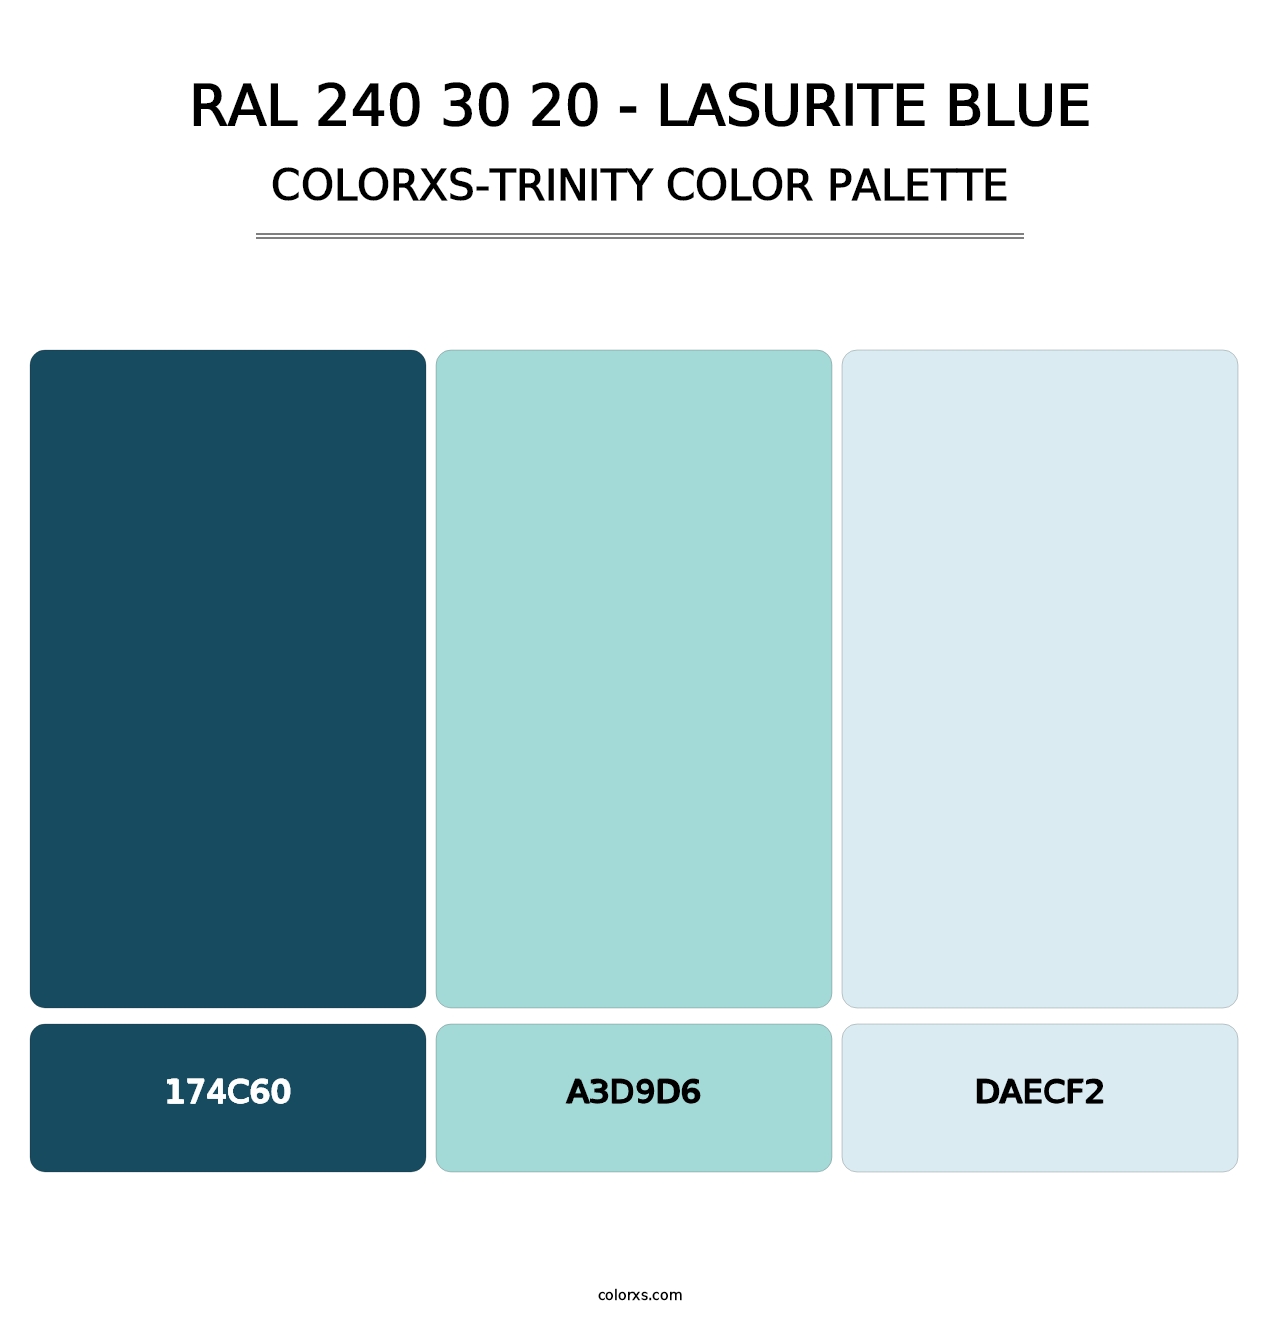 RAL 240 30 20 - Lasurite Blue - Colorxs Trinity Palette